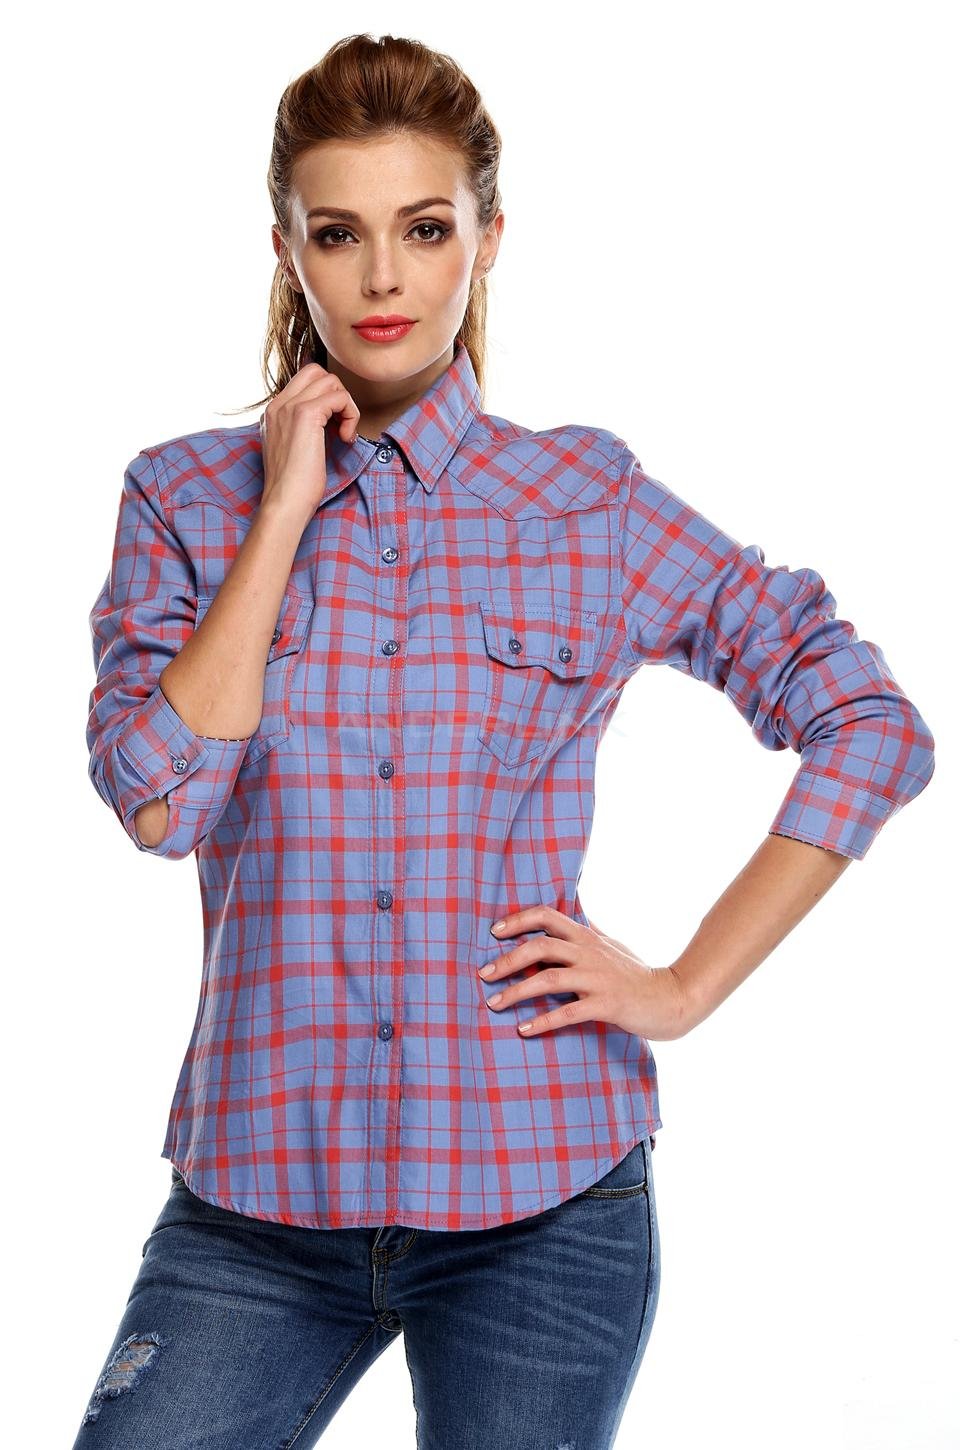 unknown Stylish New Fashion Lady Women's Plaid Long Sleeve Lapel Top Blouse Shirt